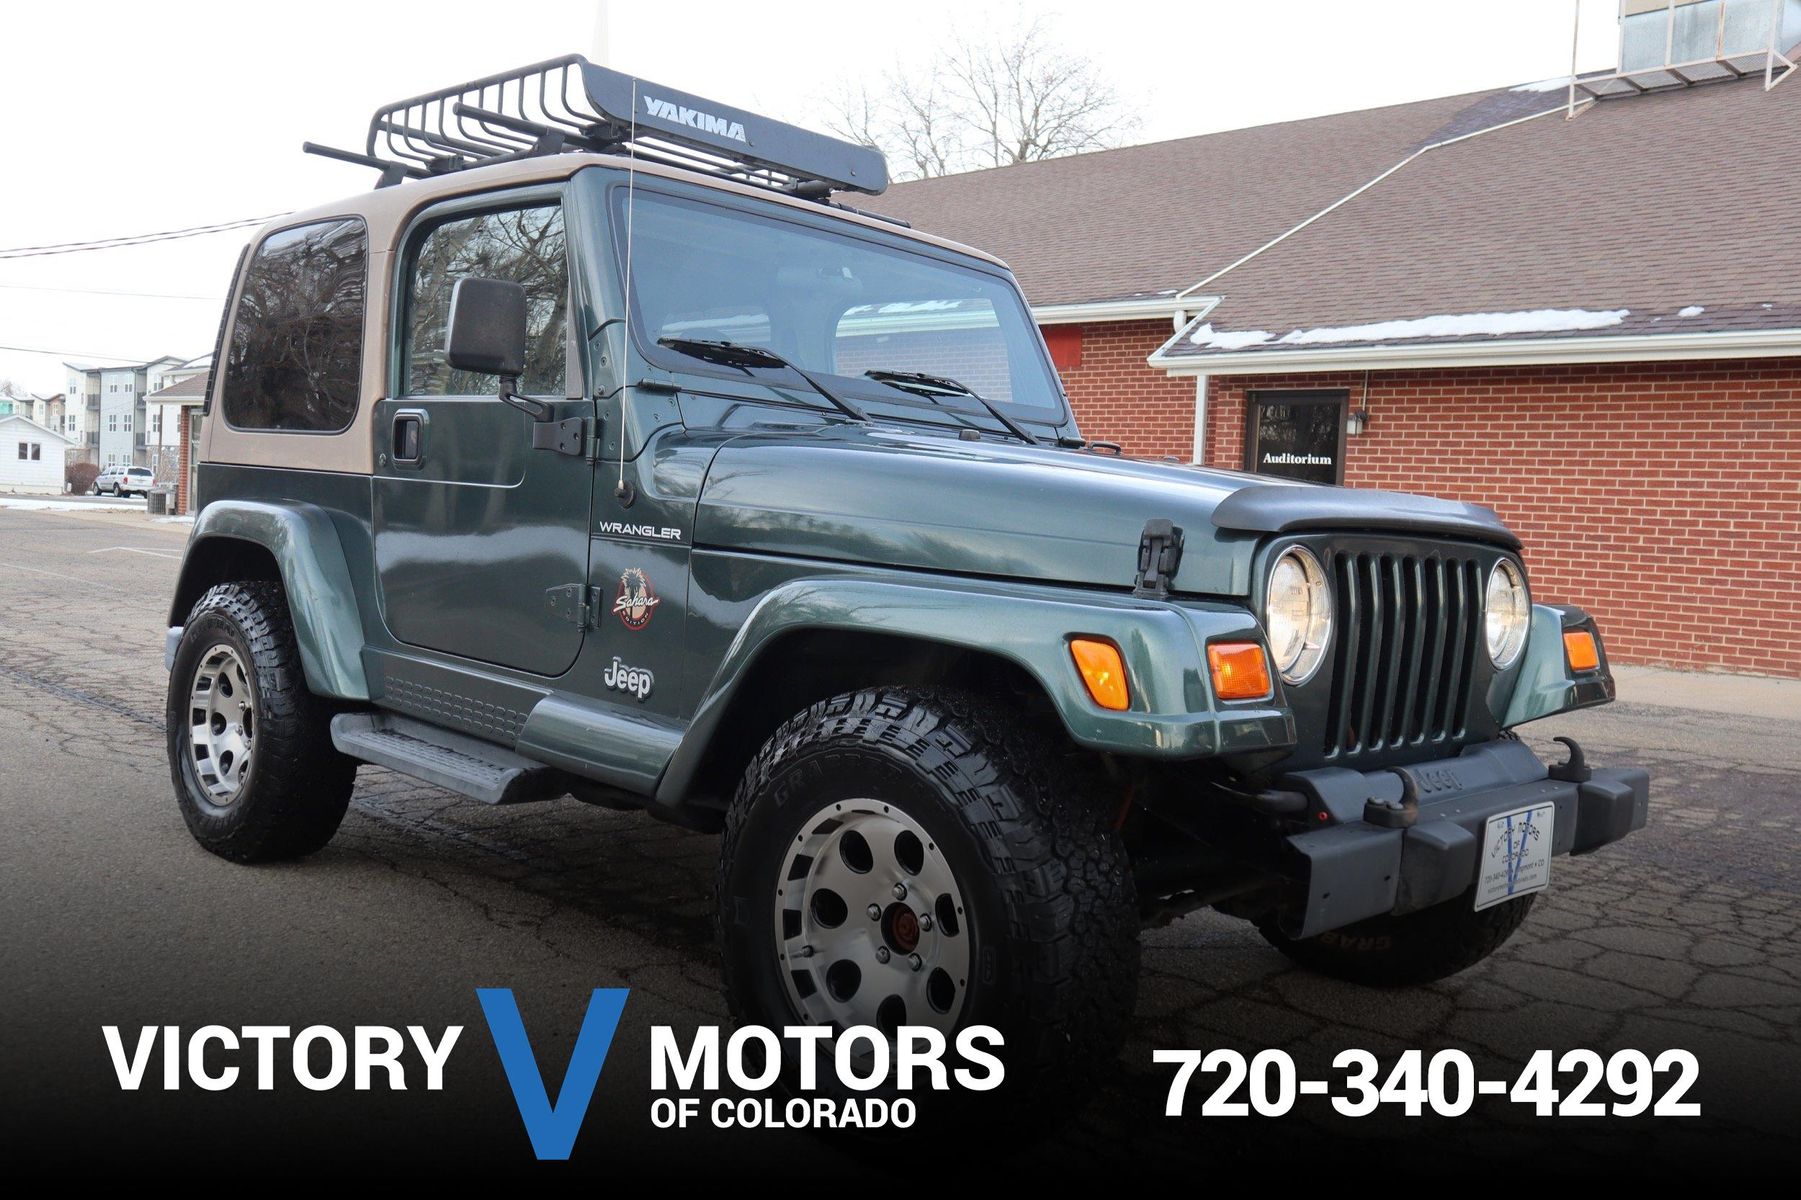 2002 Jeep Wrangler Sahara | Victory Motors of Colorado